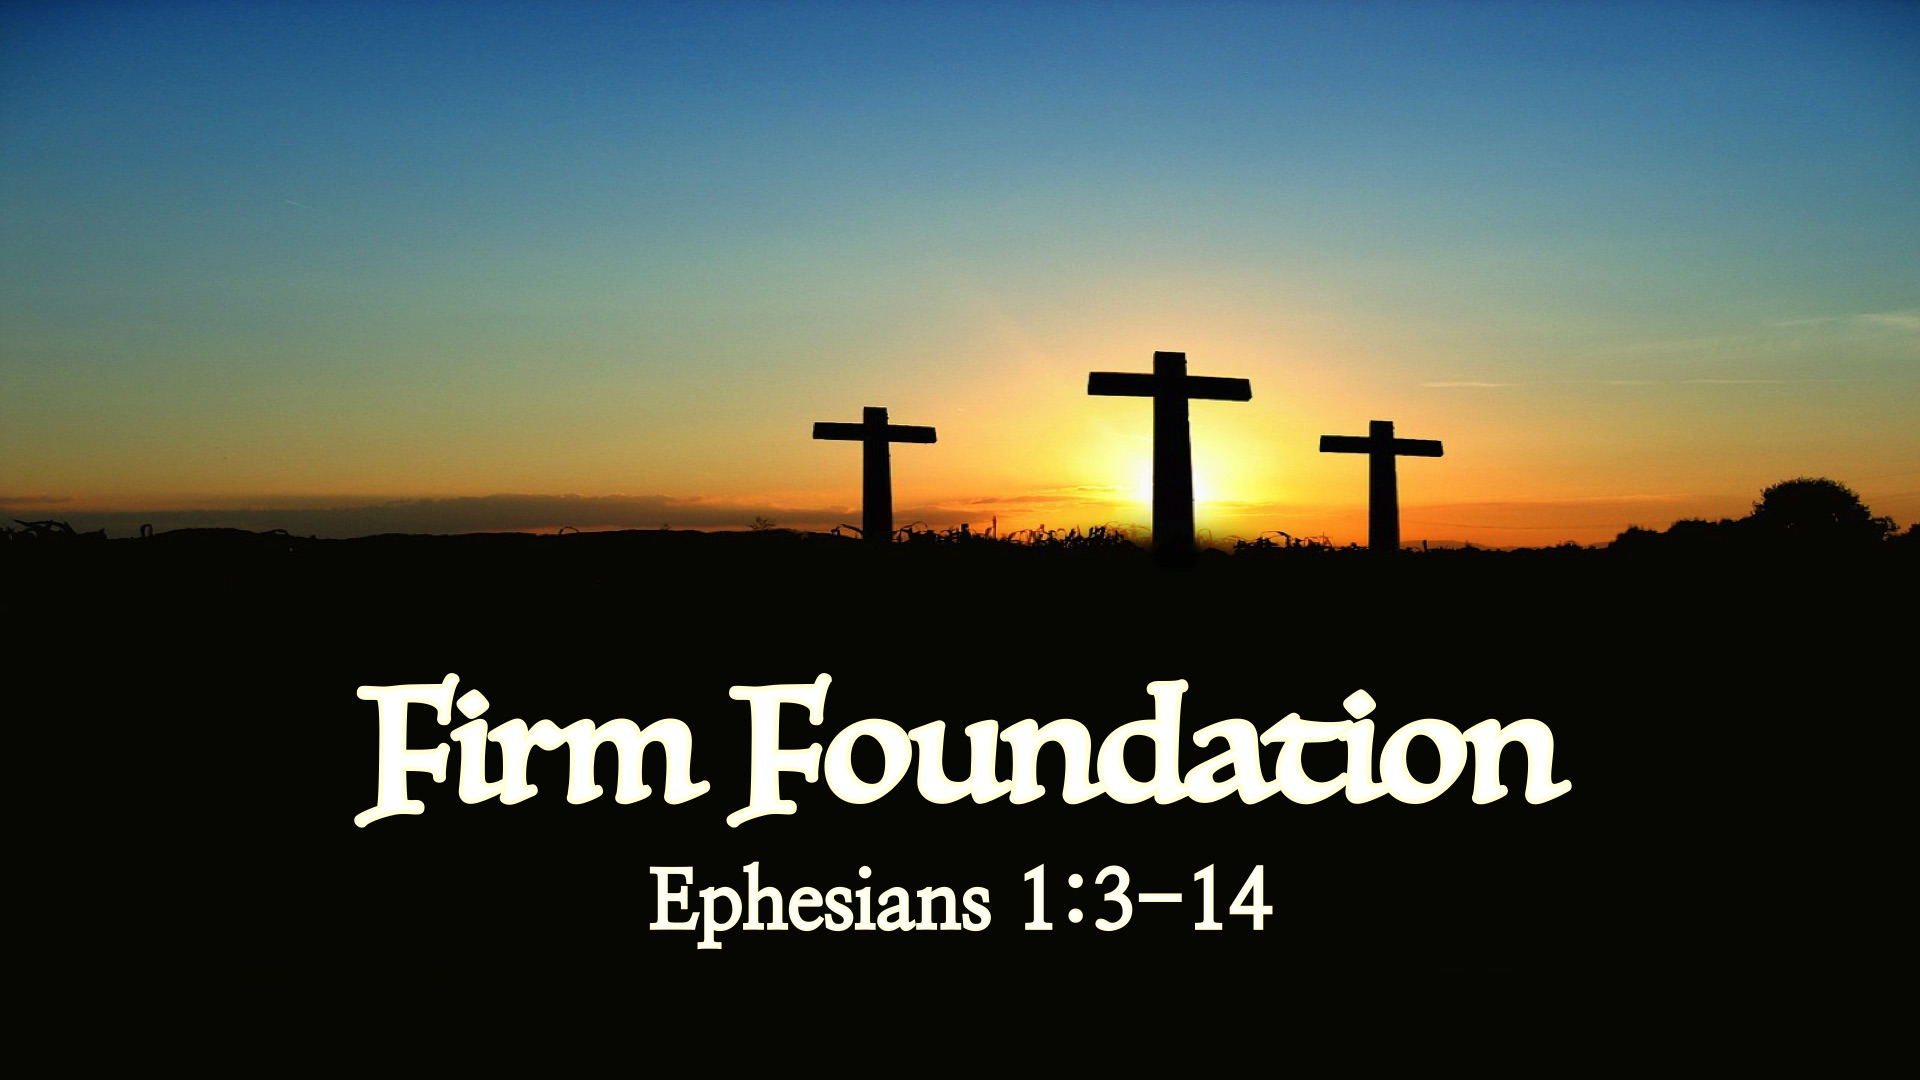 “Firm Foundation”